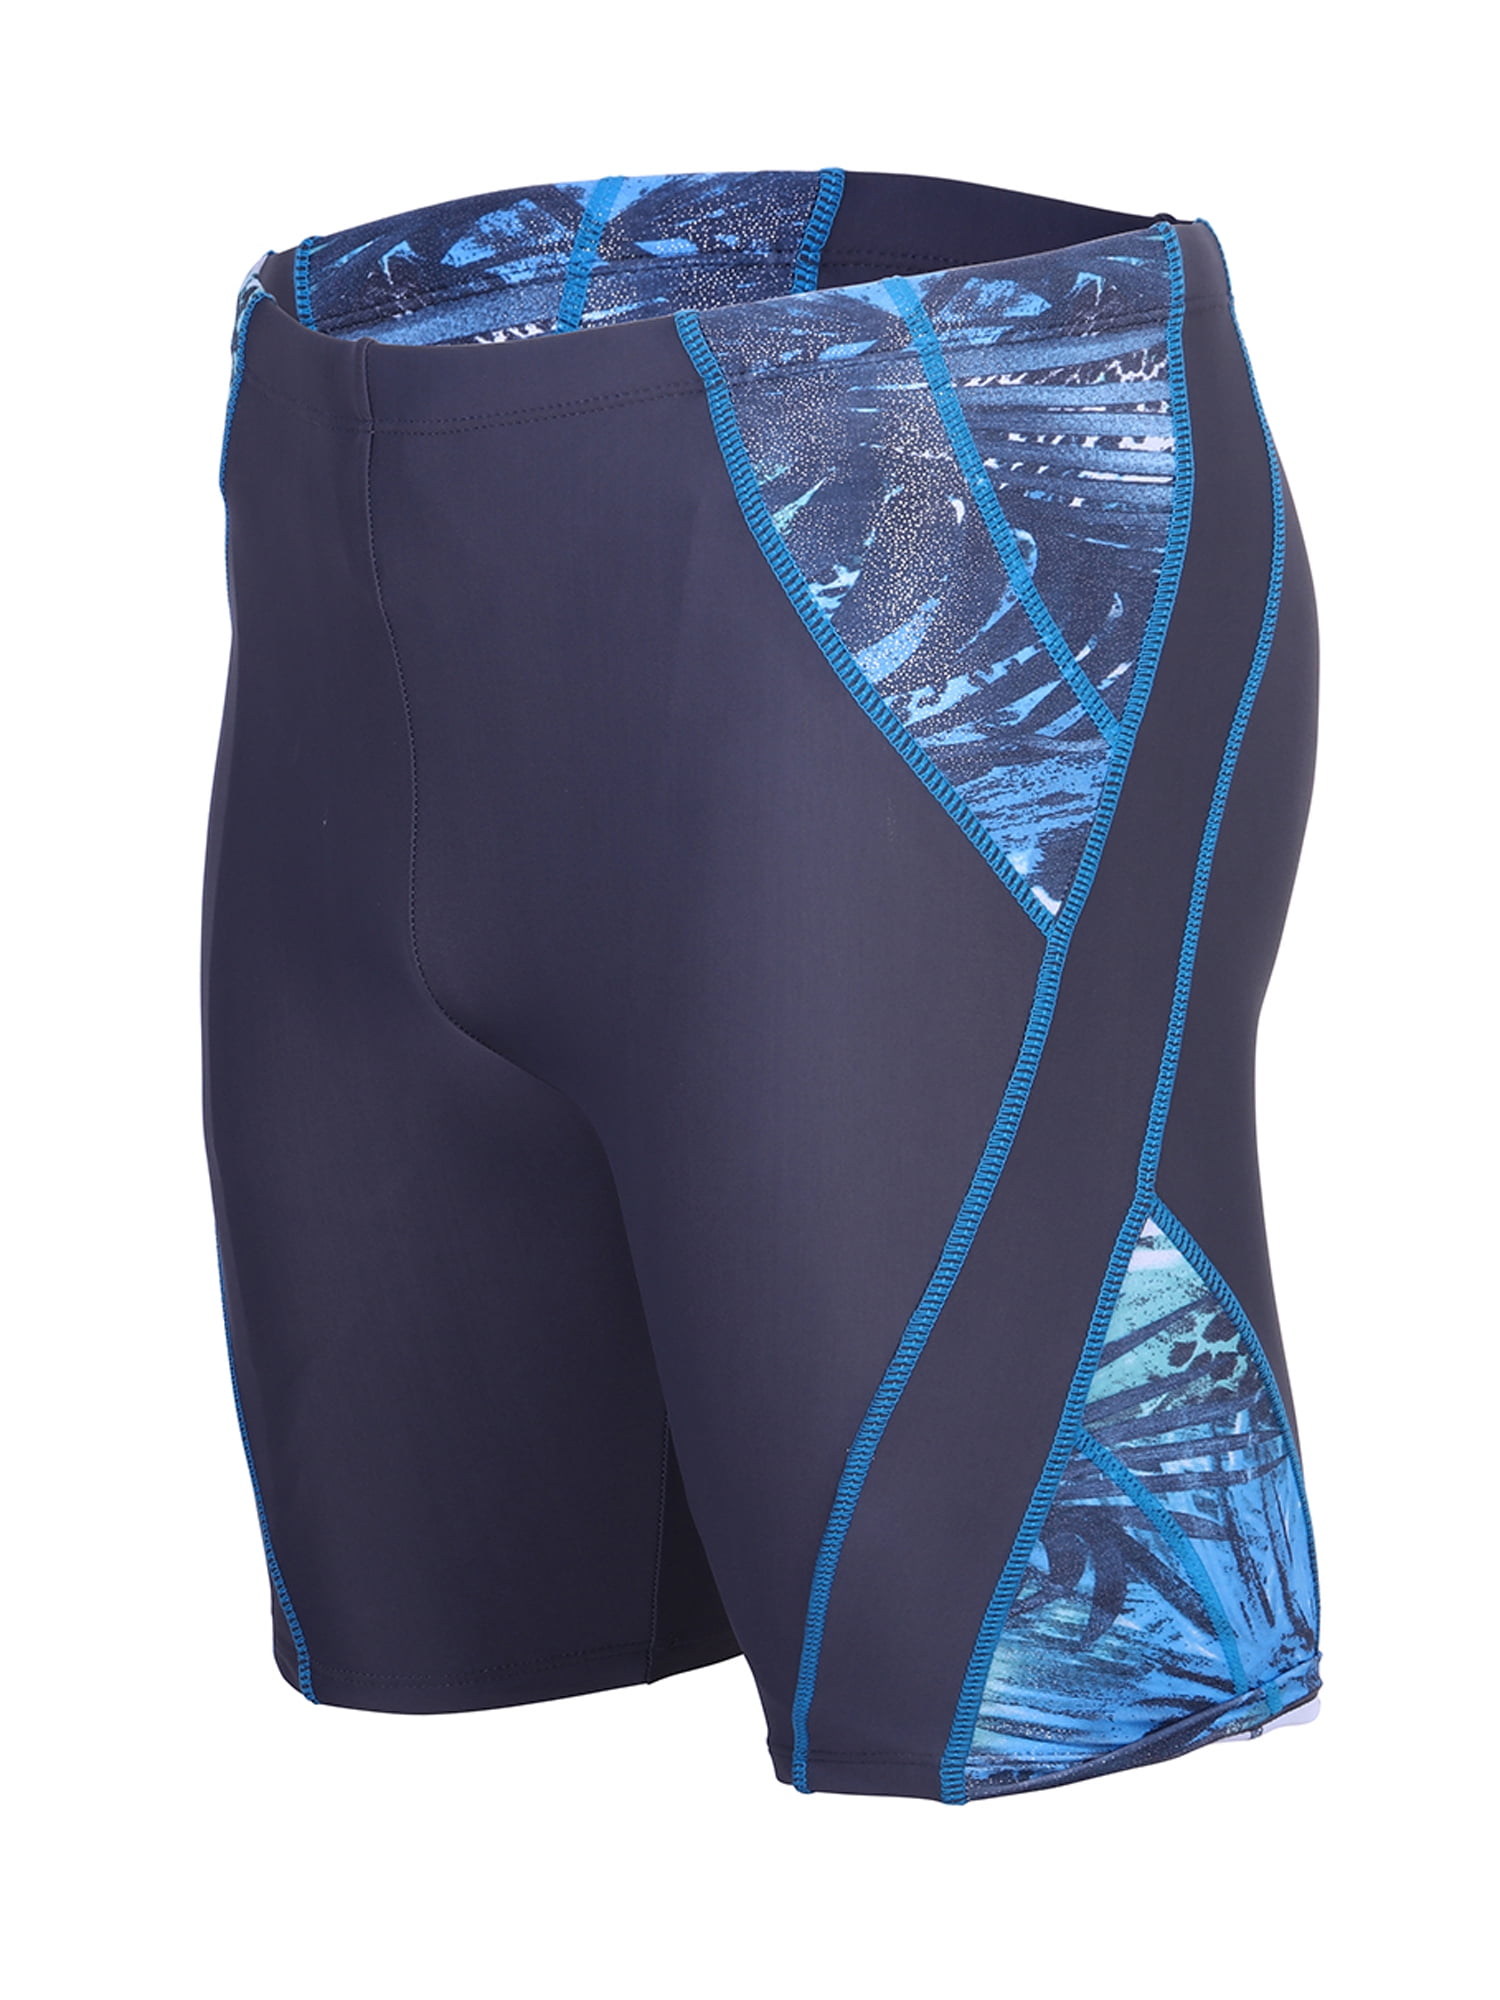 LELINTA Men's Fashion Swim Trunks Quick Dry Compression Tight Jammer ...